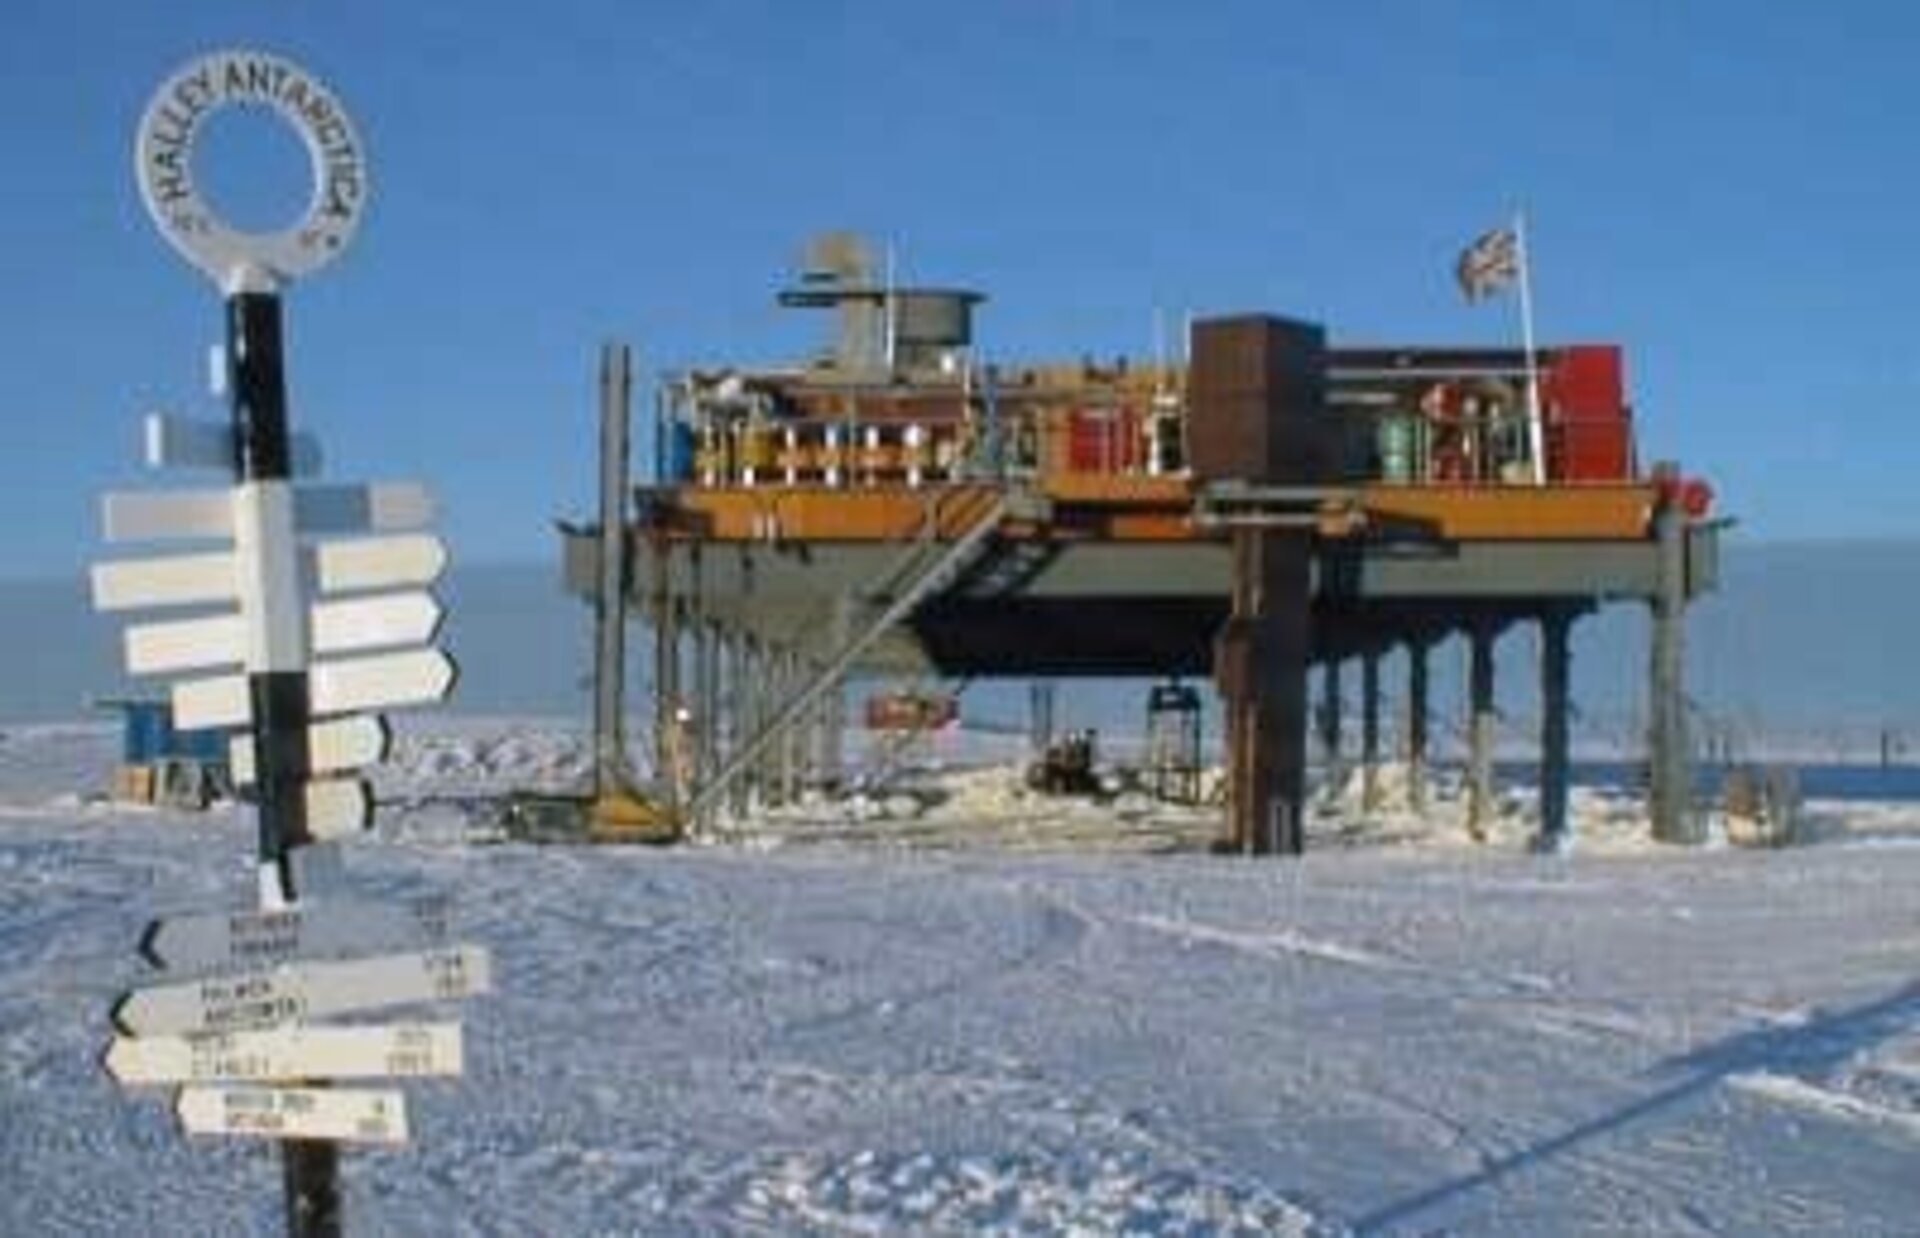 British Antarctic Survey's Halley Base